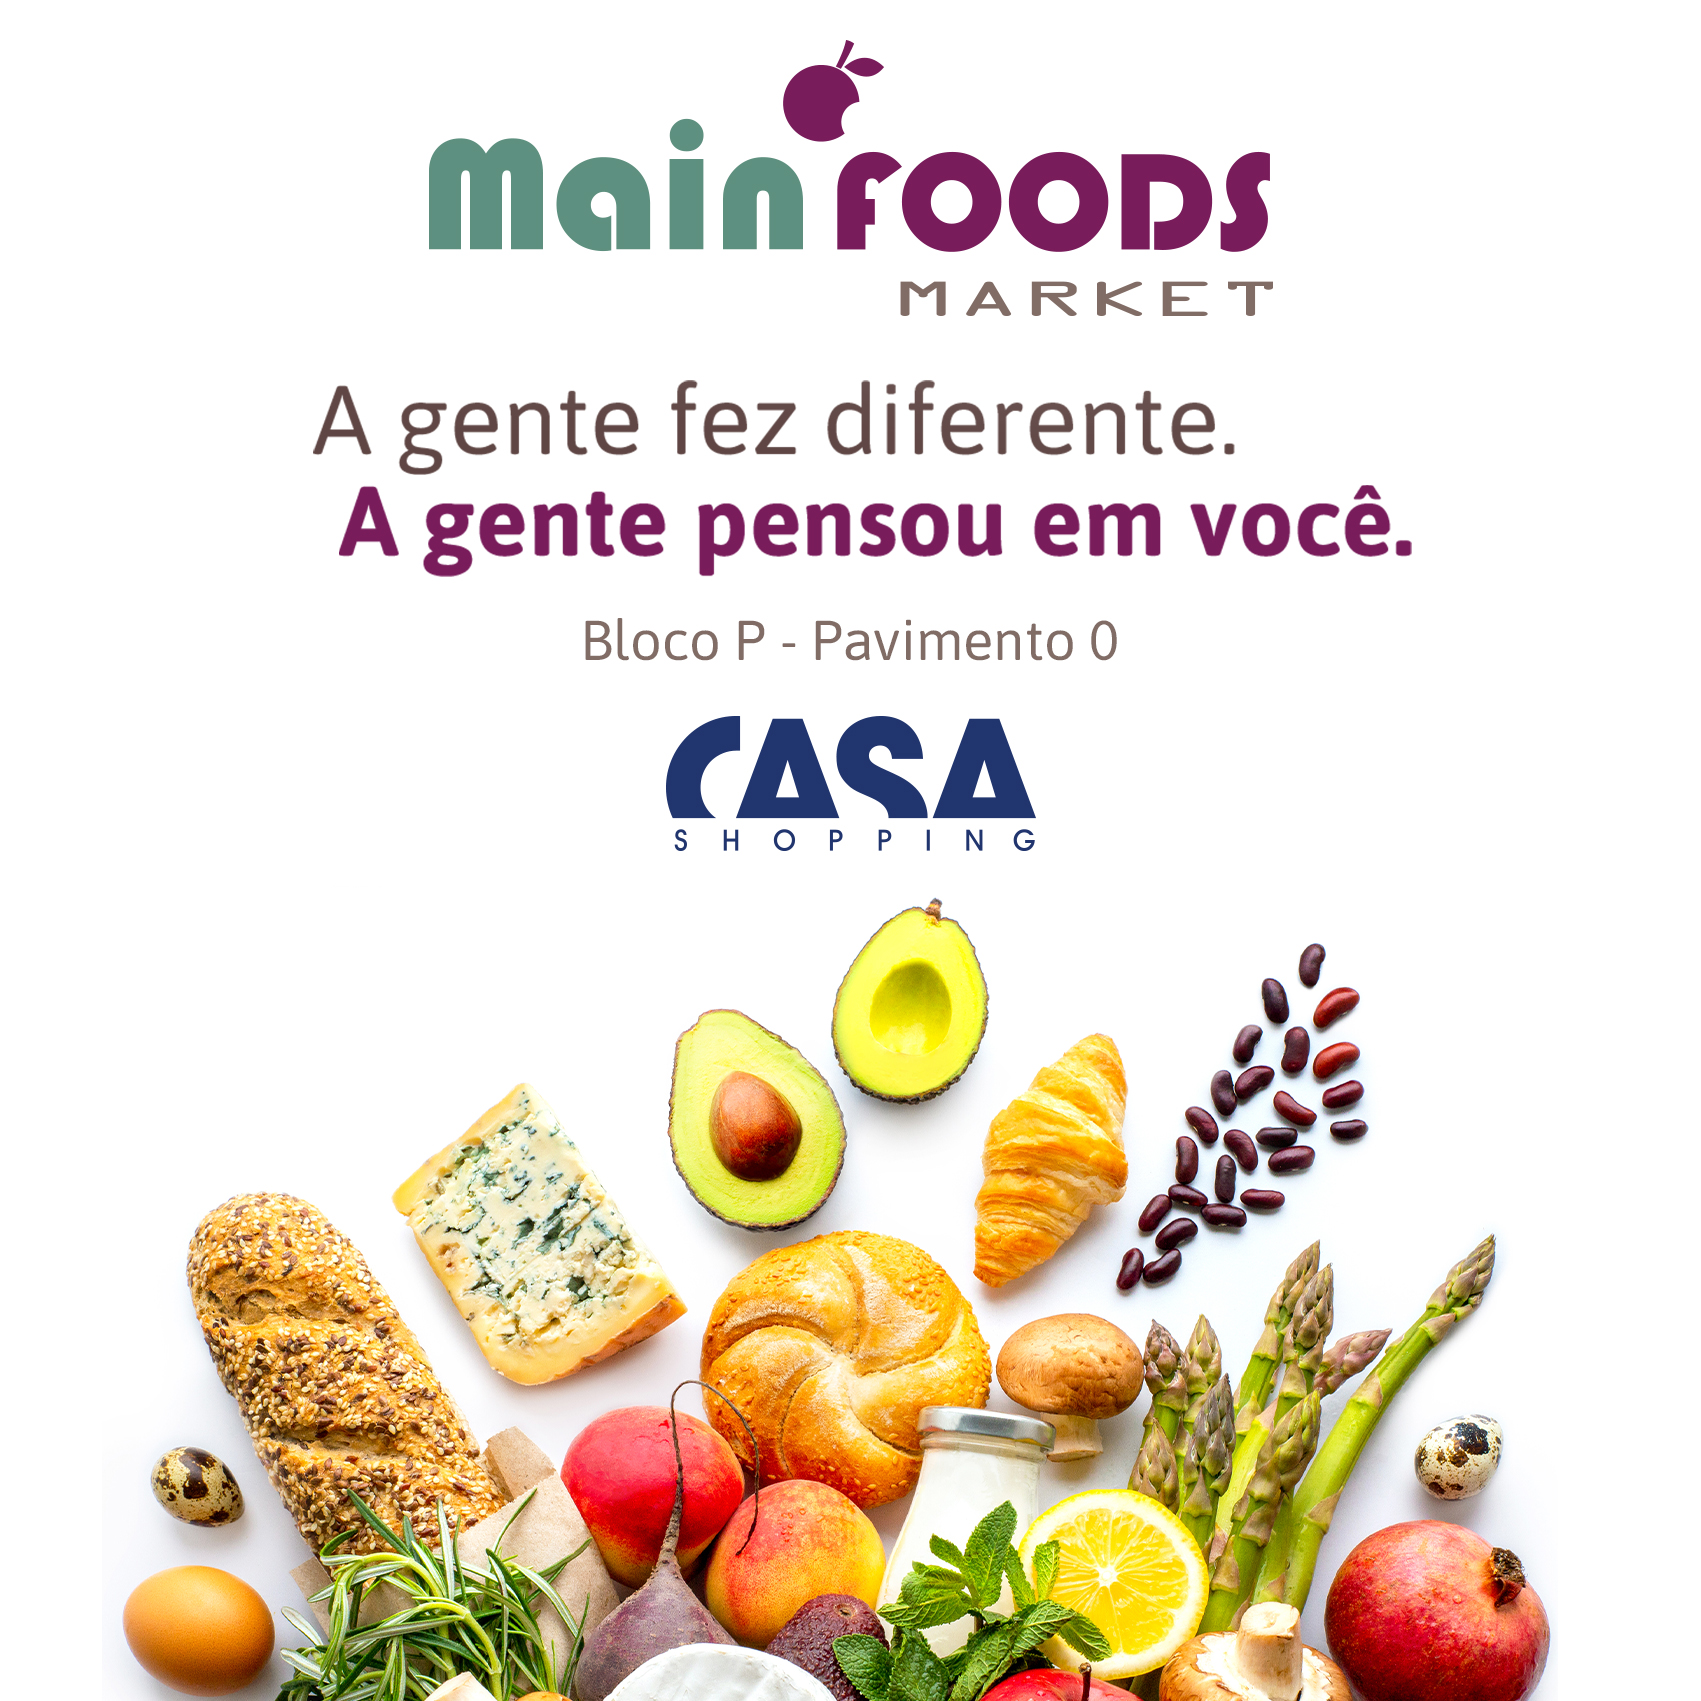 Main Foods - Inauguracao